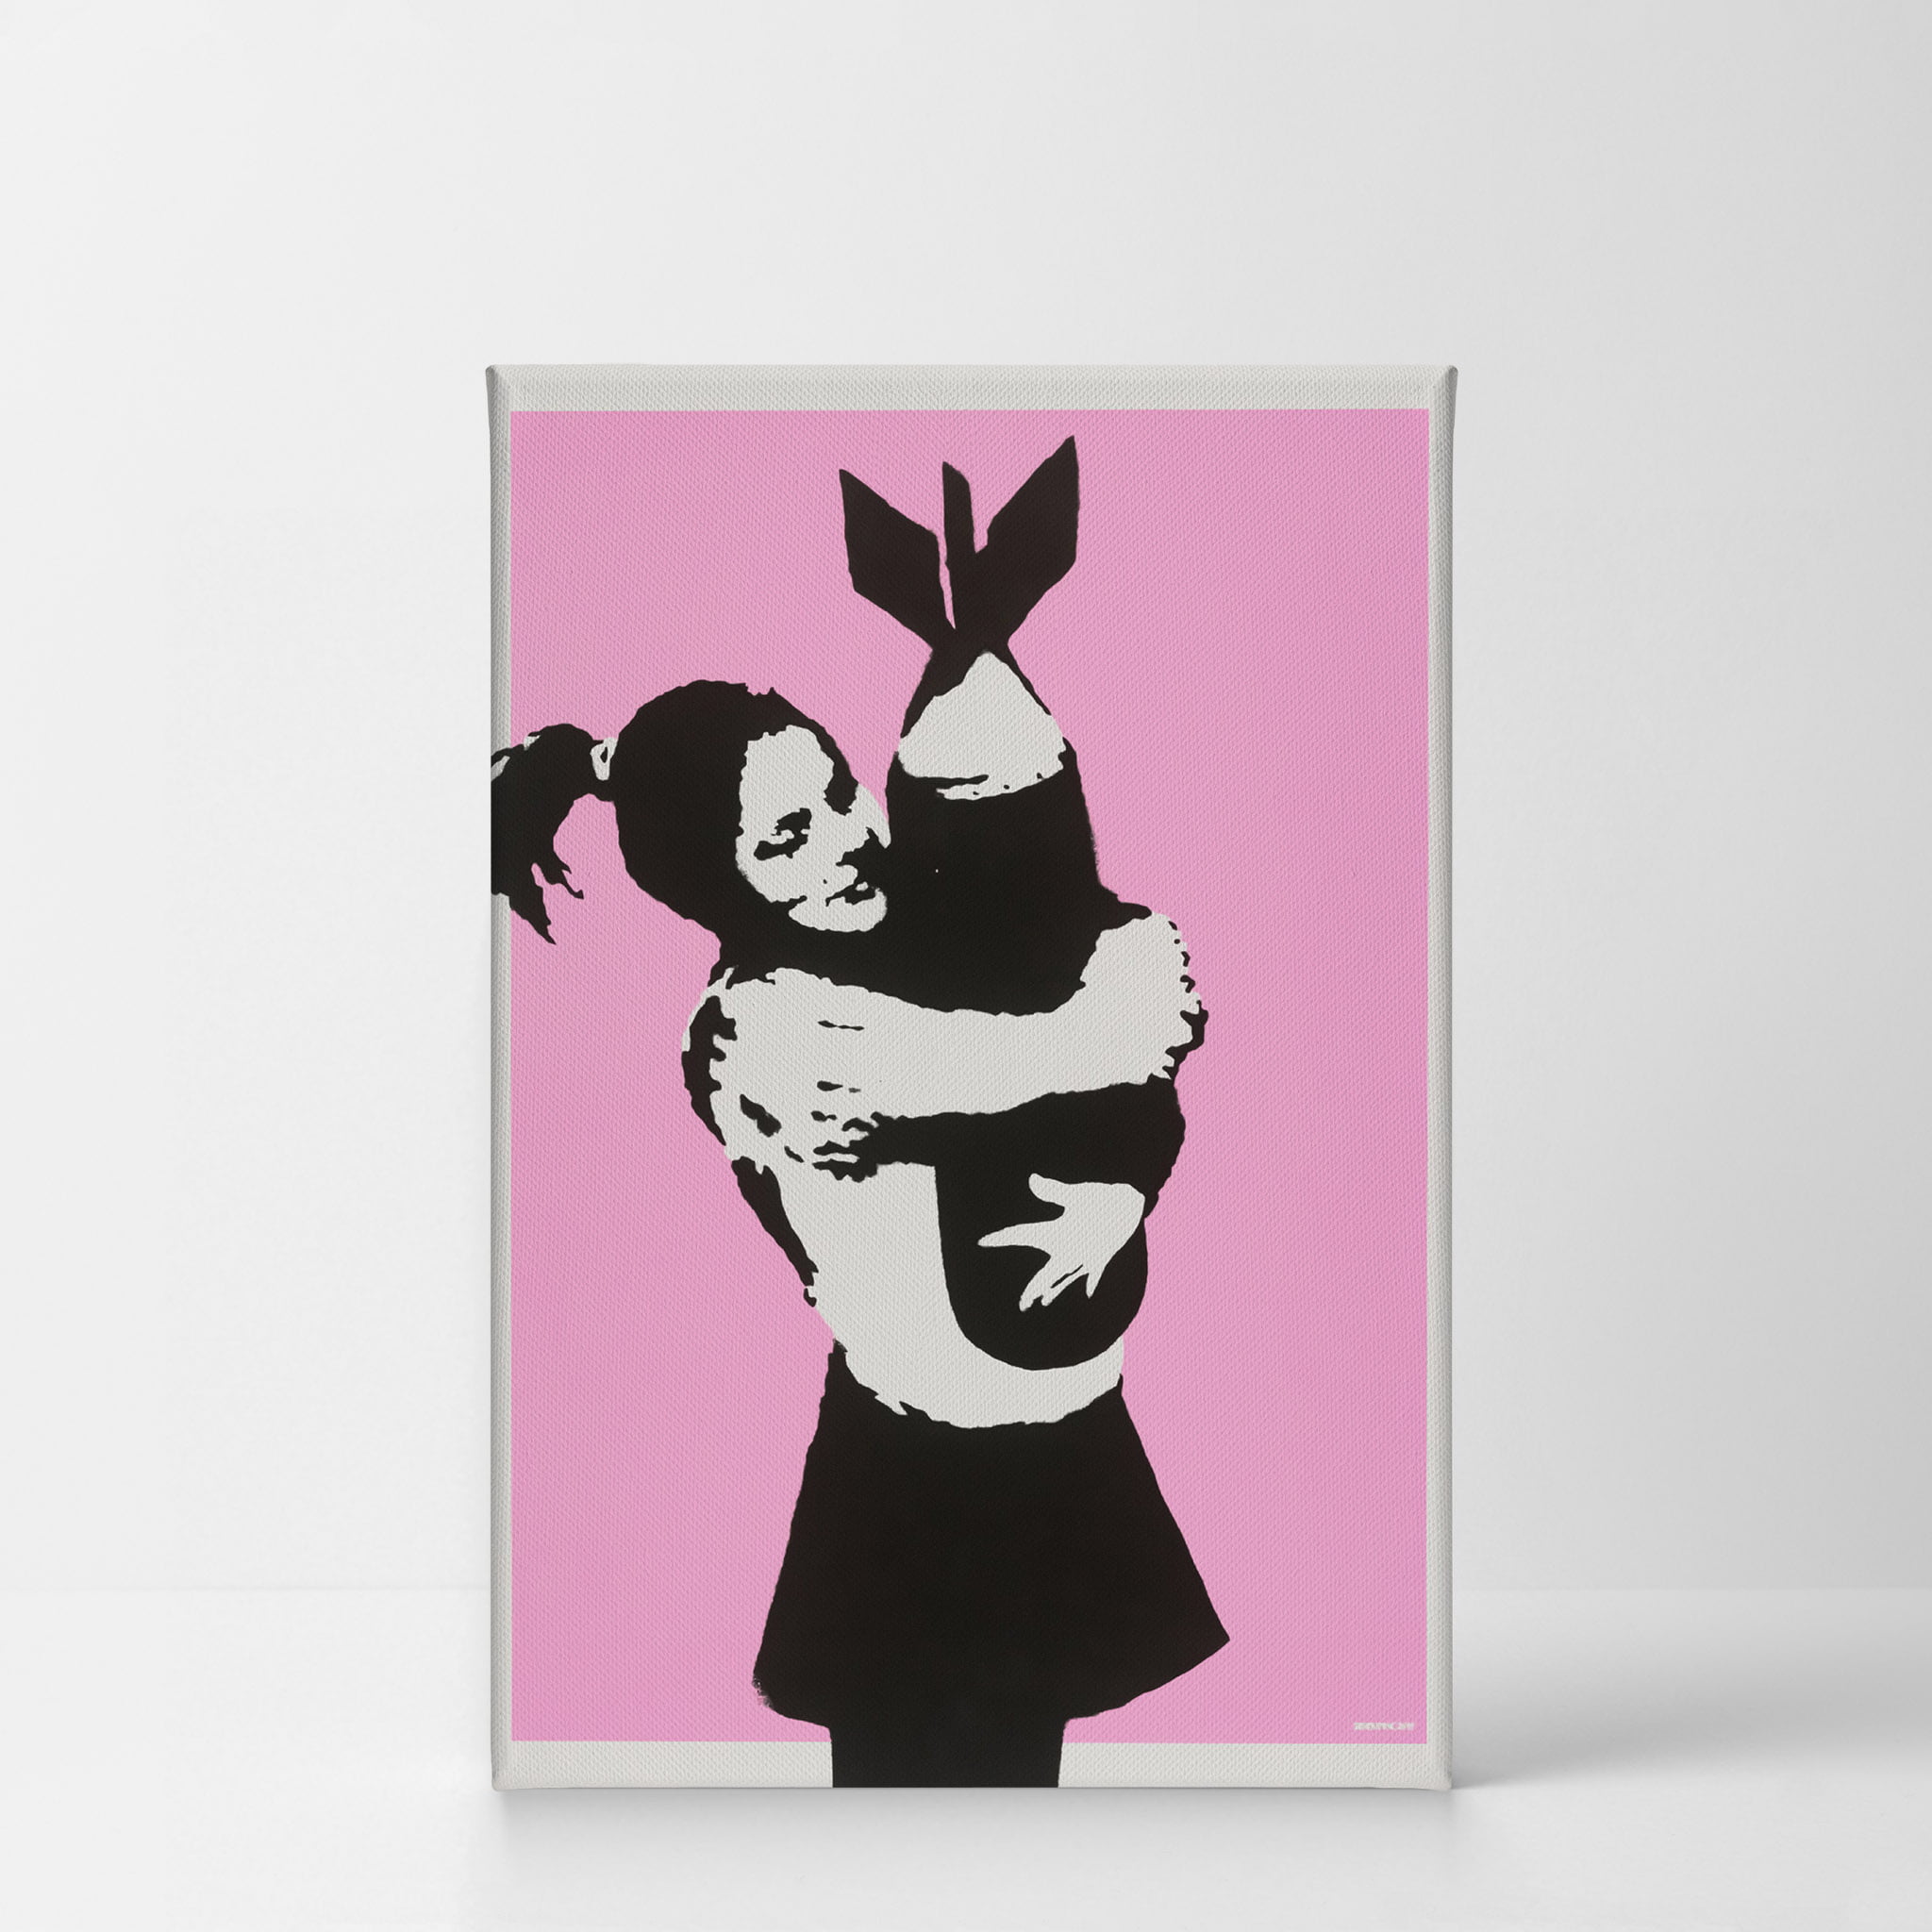 Girl Bomb Hugger Vinyl Wall Sticker art decal large pic graphics banksy